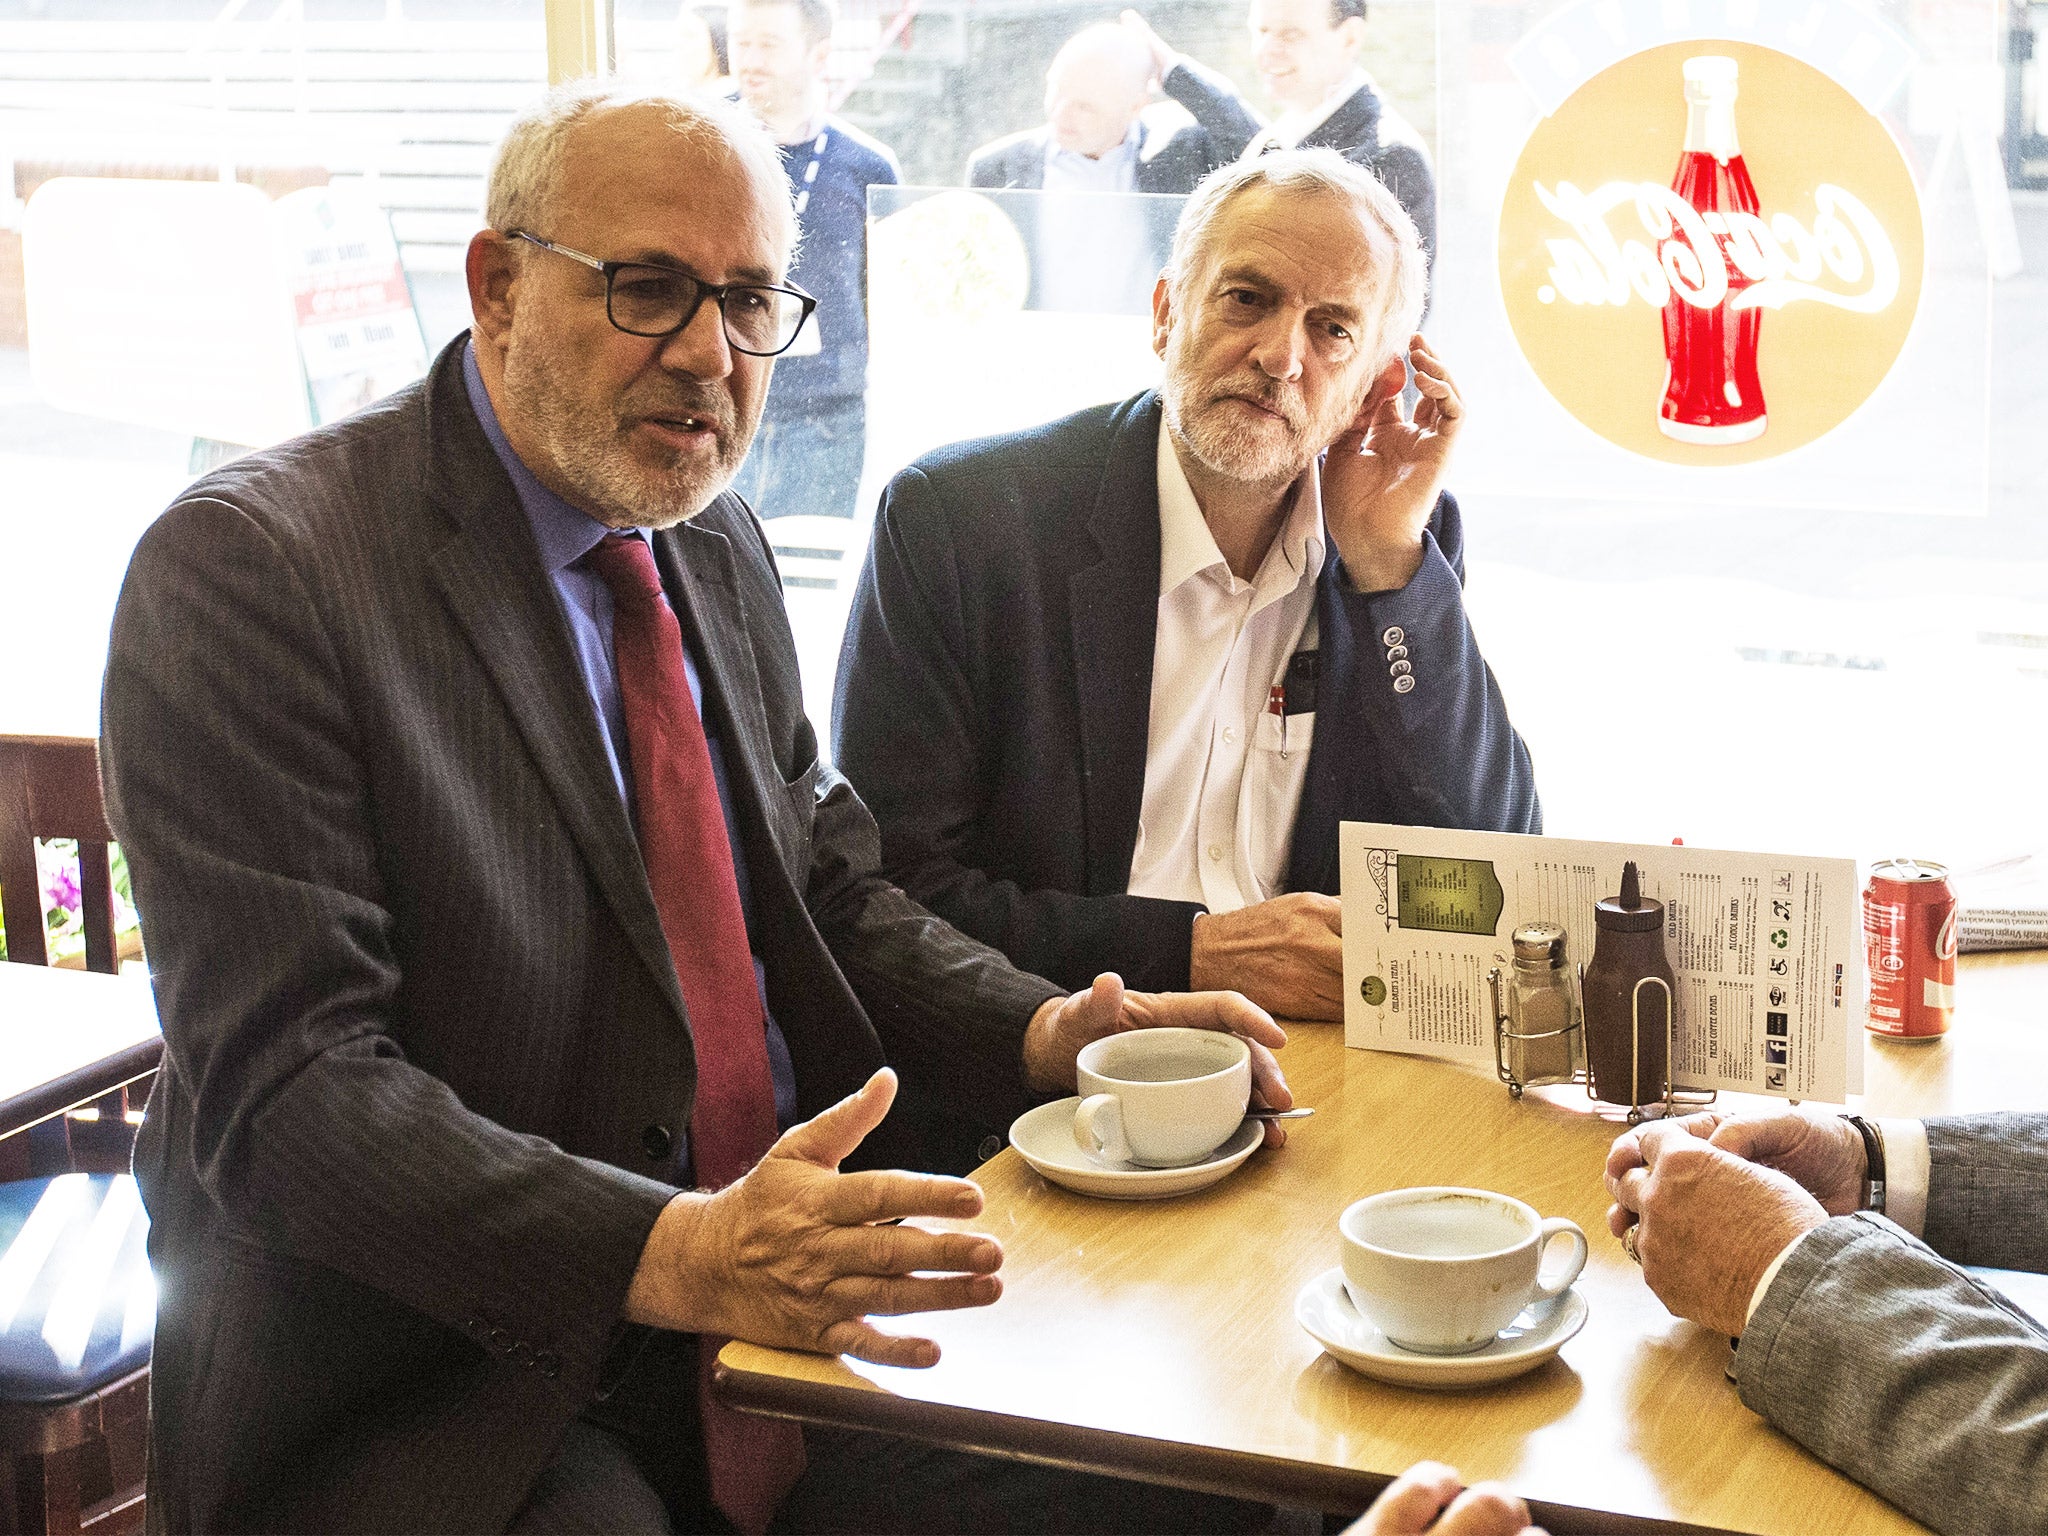 Jon Trickett, left, with Jeremy Corbyn in Harlow on Tuesday